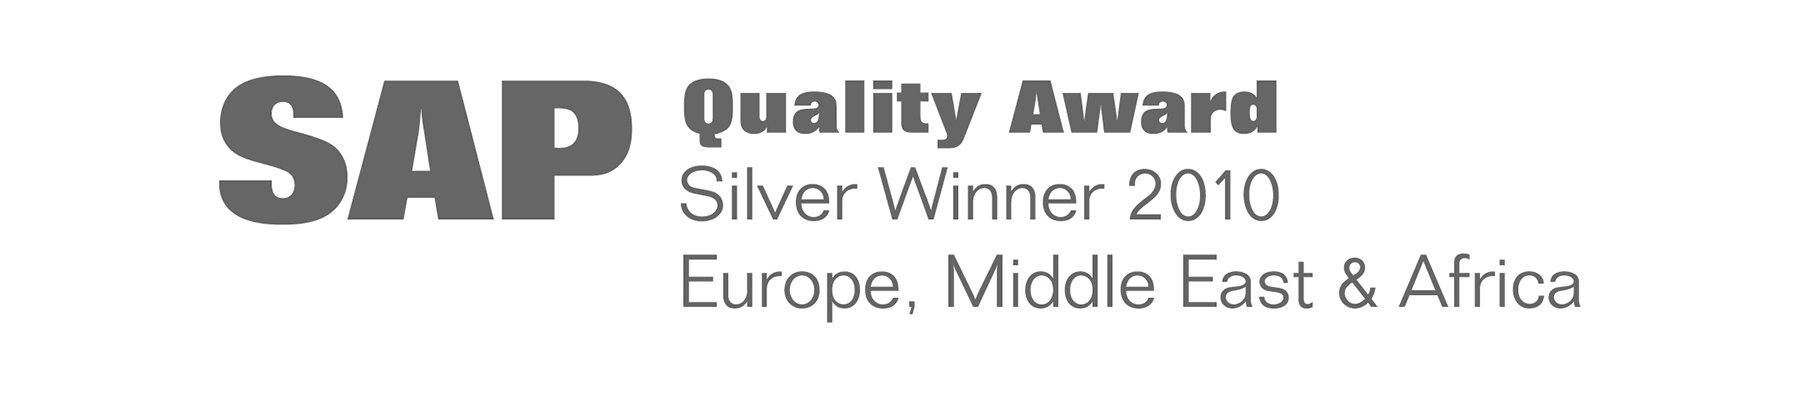 Logo SAP Quality Award 2010